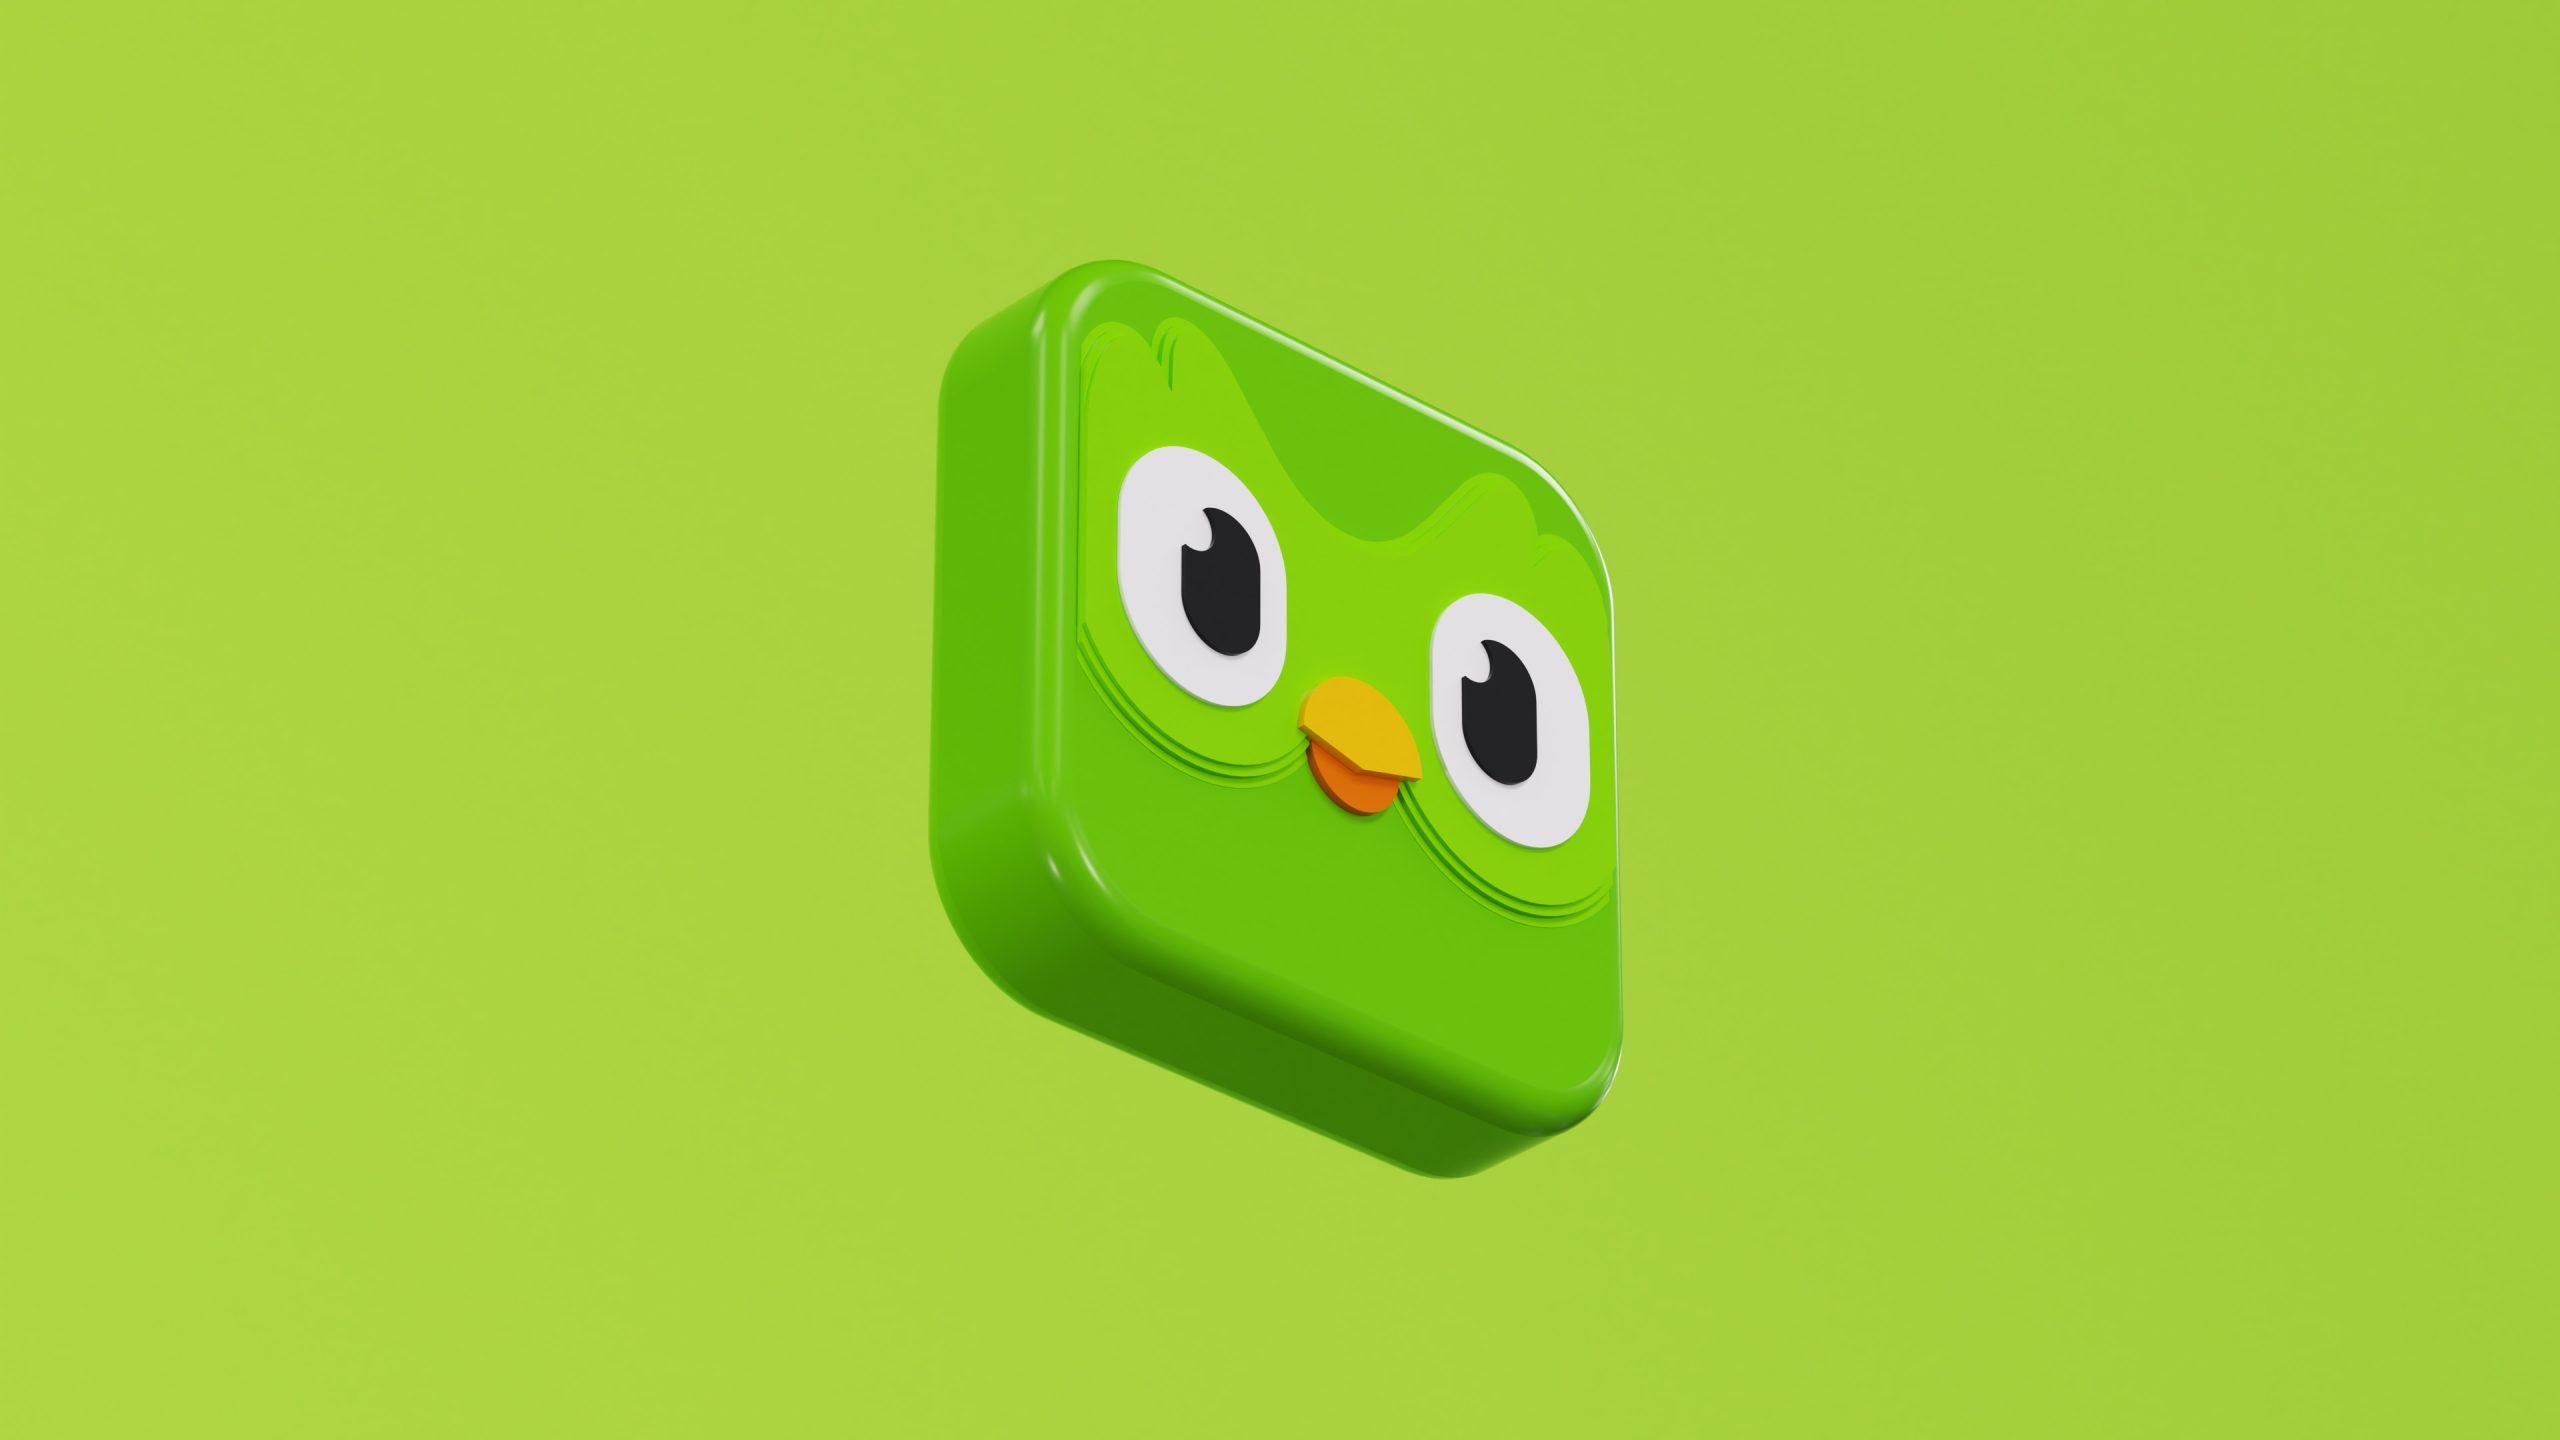 Duolingo logo against a lime green background.